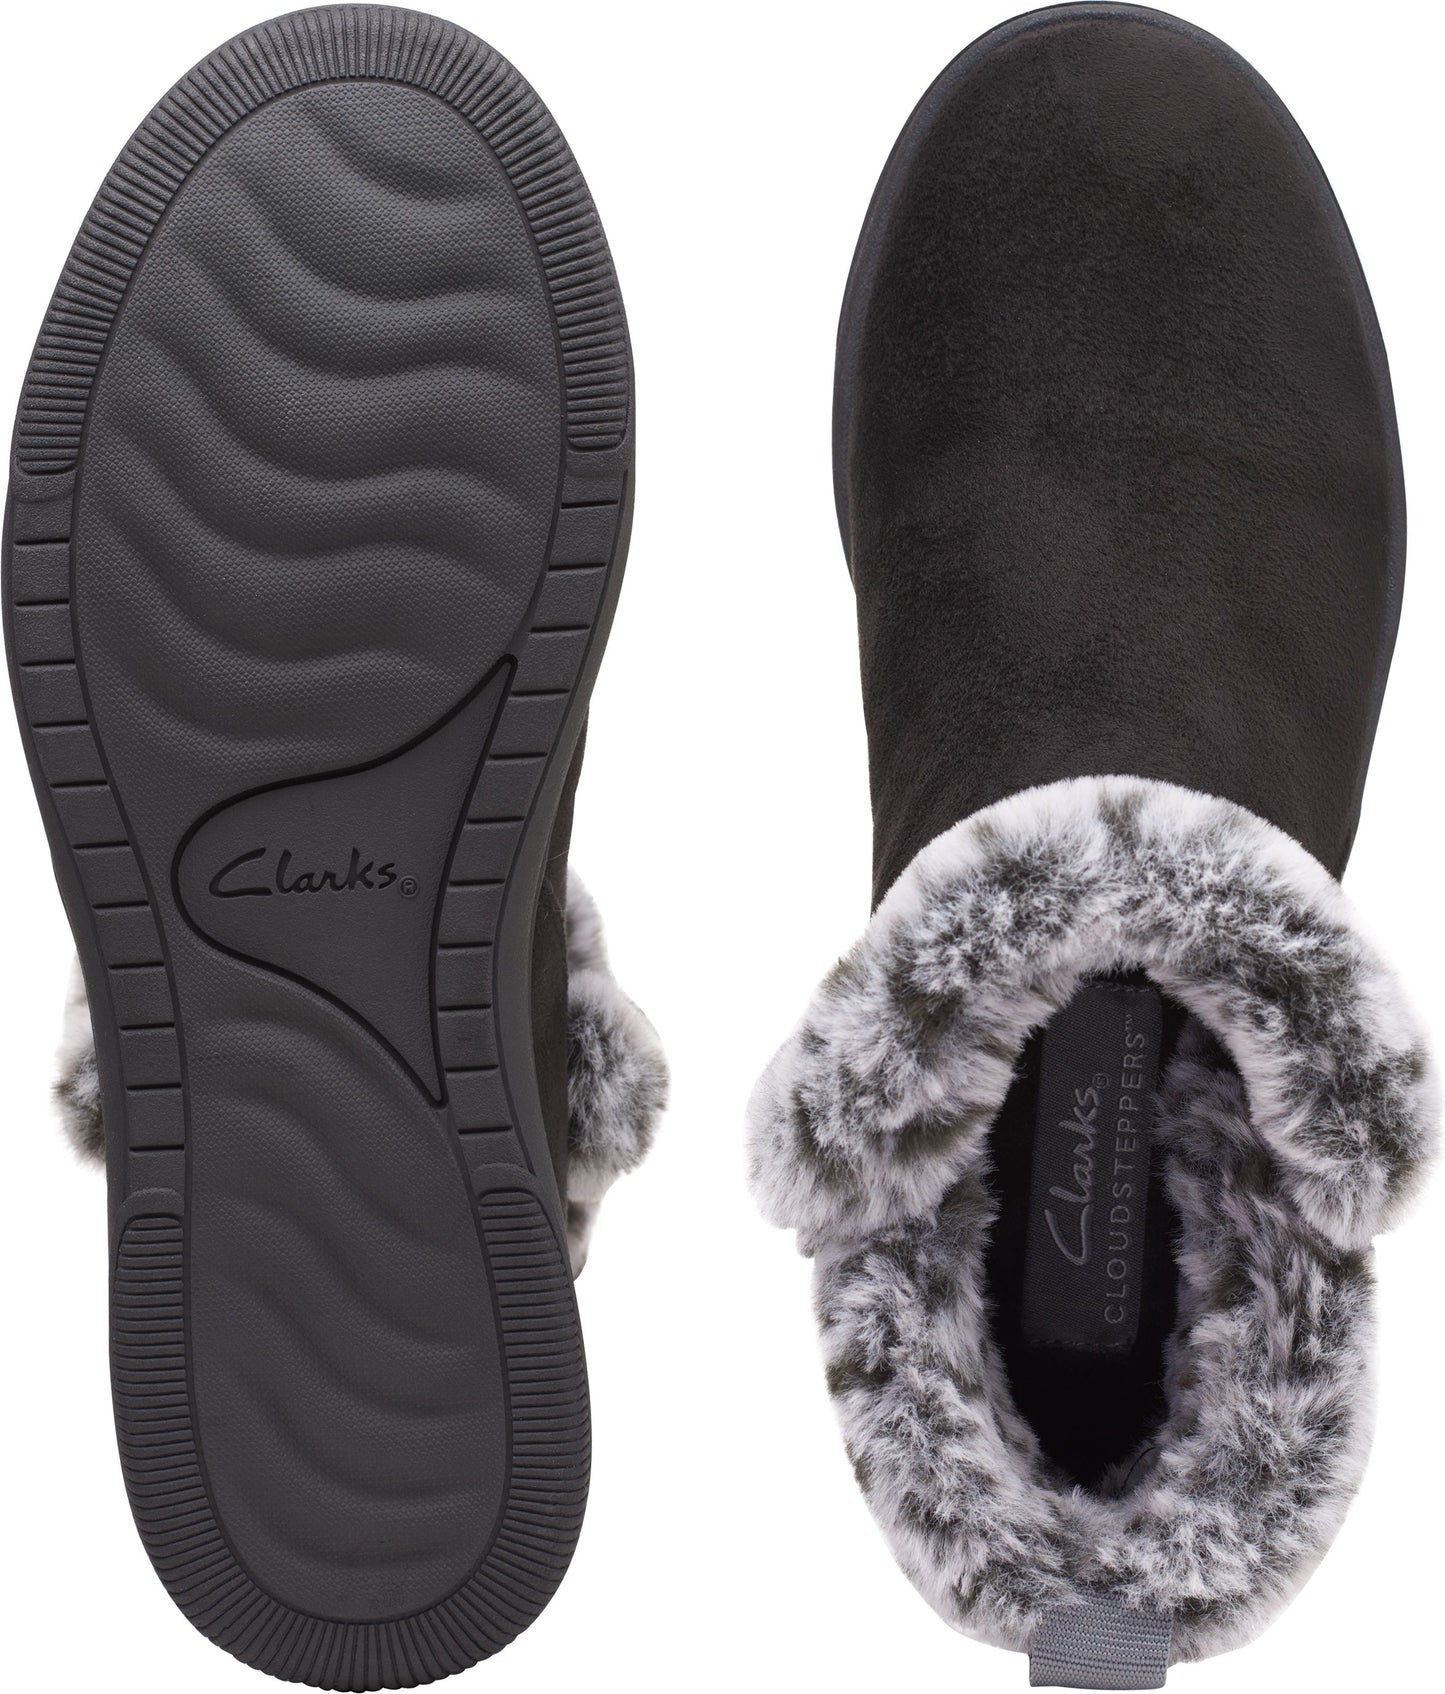 Clarks Boots Breeze Fur Black